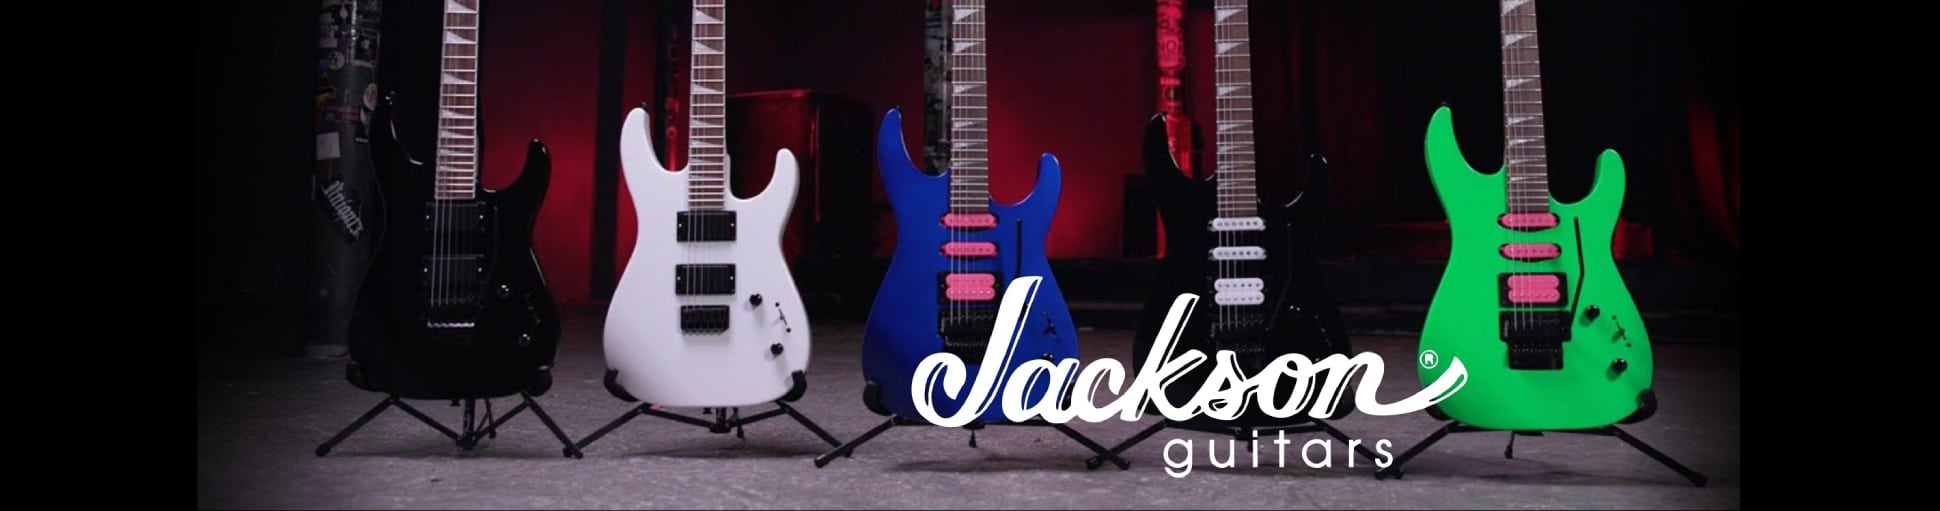 Jackson Guitar BannIerE